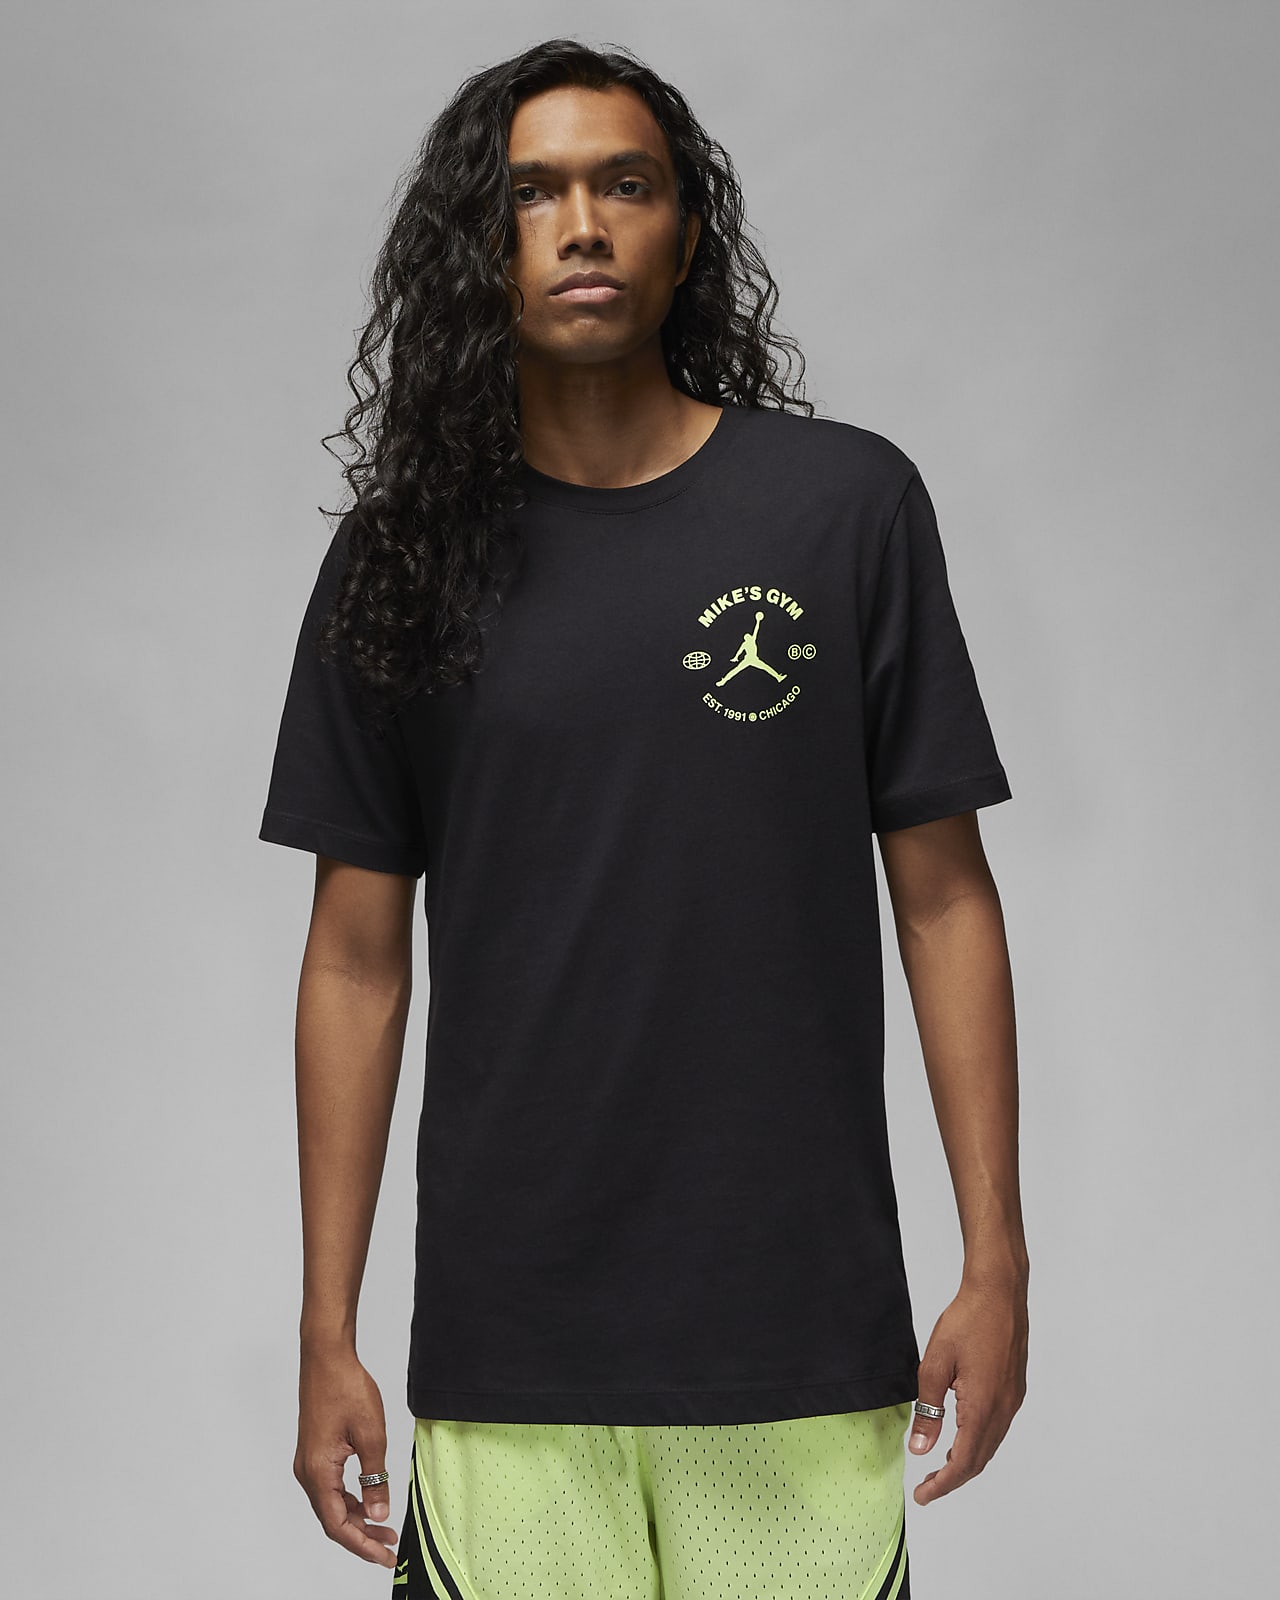 Tentación acidez Ciego Jordan Sport BC Men's Graphic T-Shirt. Nike.com